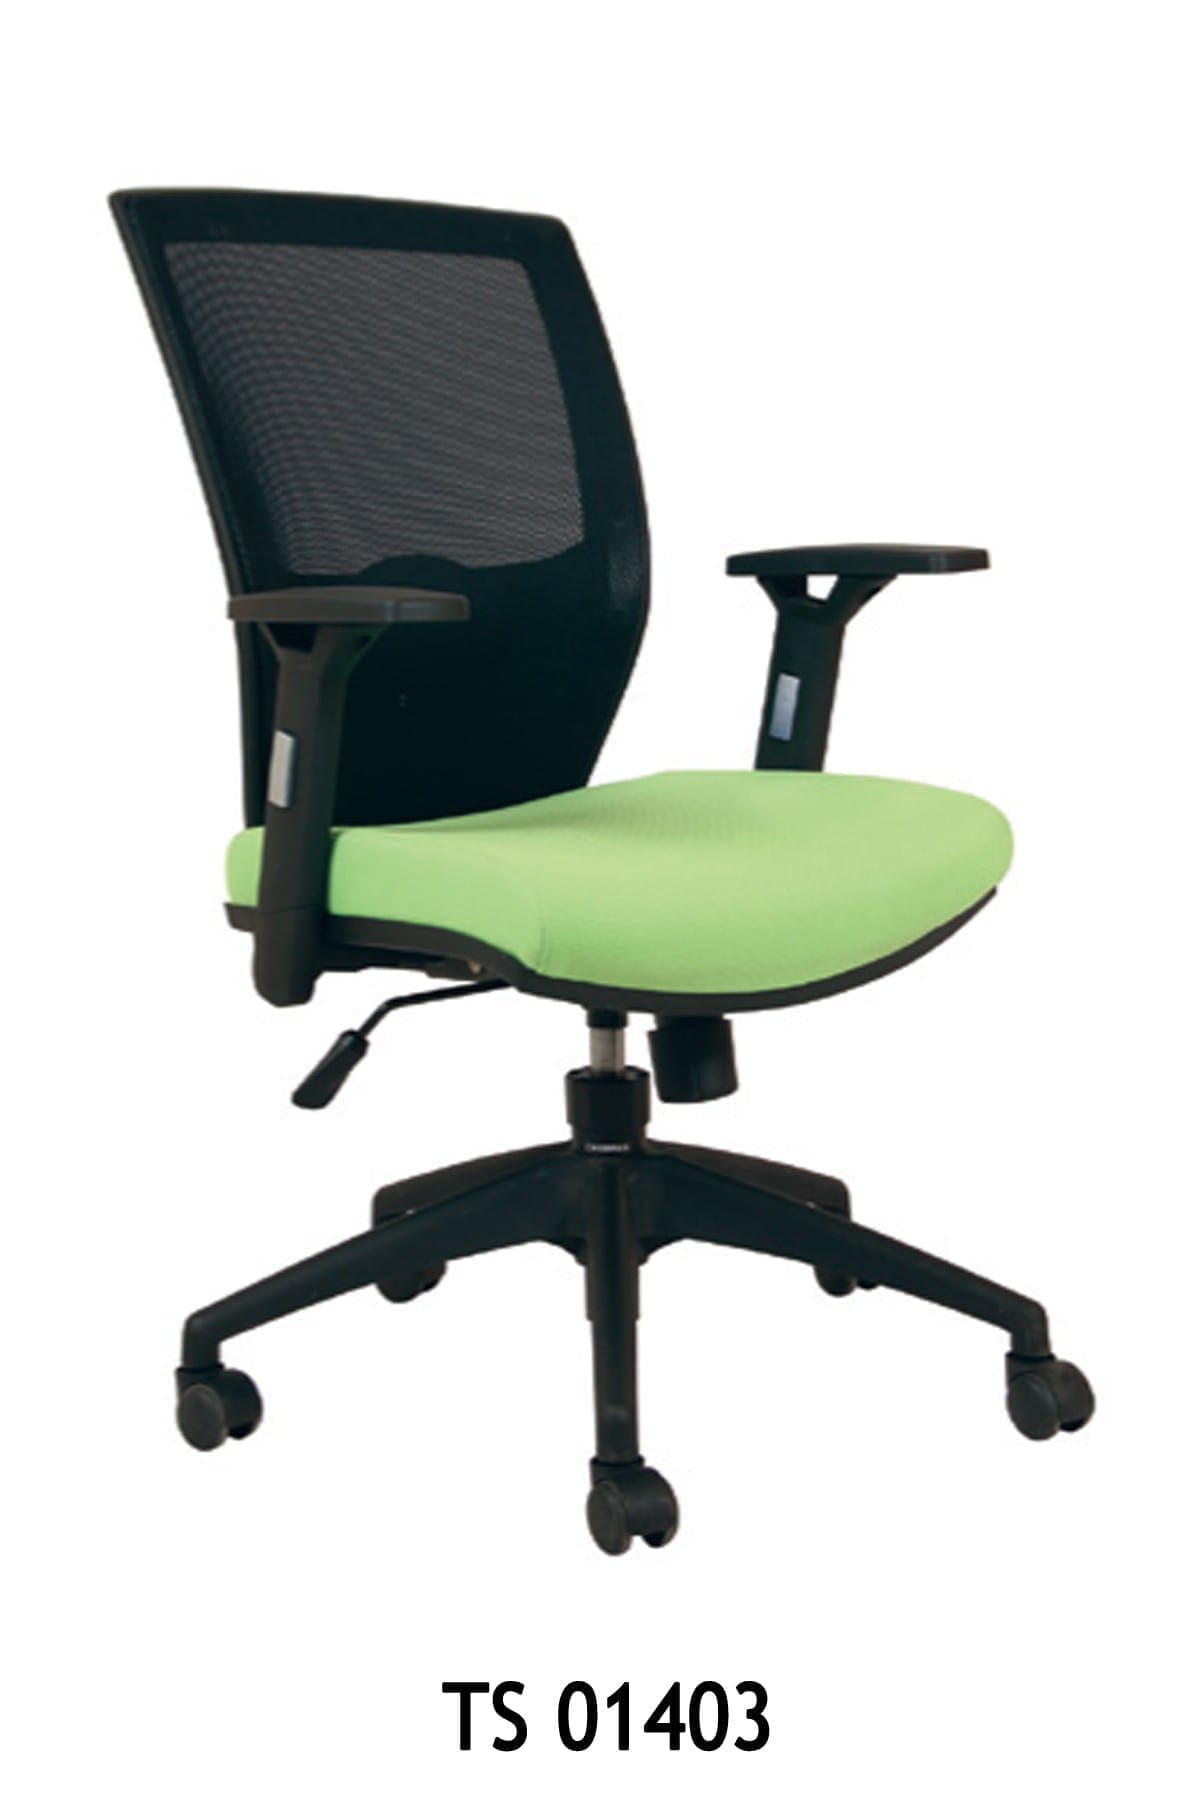 Envio TS 01403 Kursi Kantor Chairman | Subur Furniture Online Store